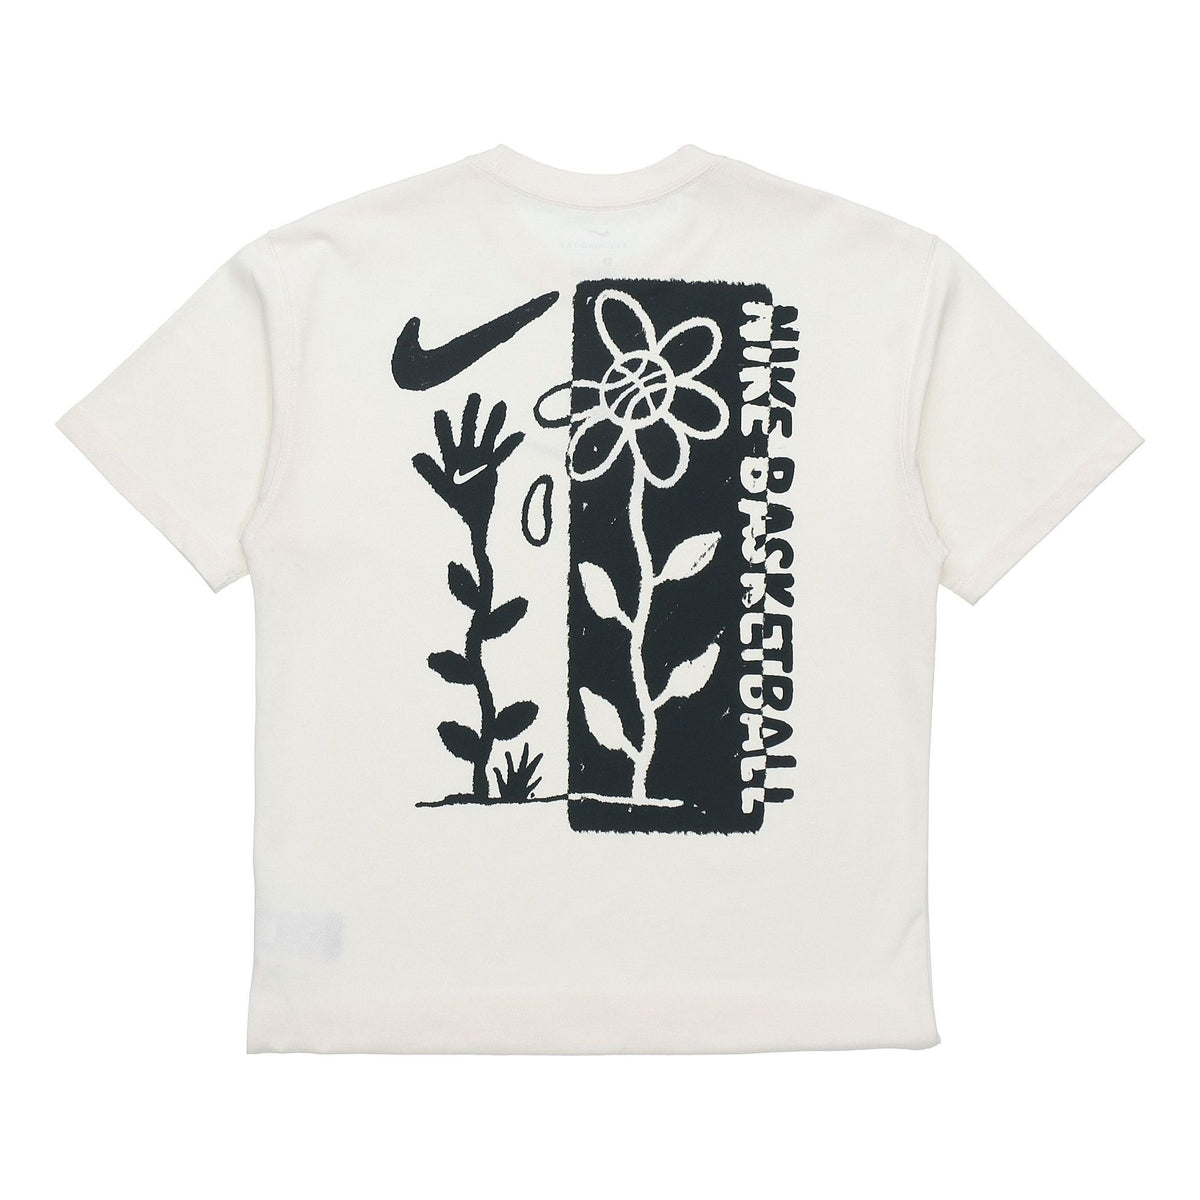 Nike Brooklyn Baseball Club Shirt - High-Quality Printed Brand